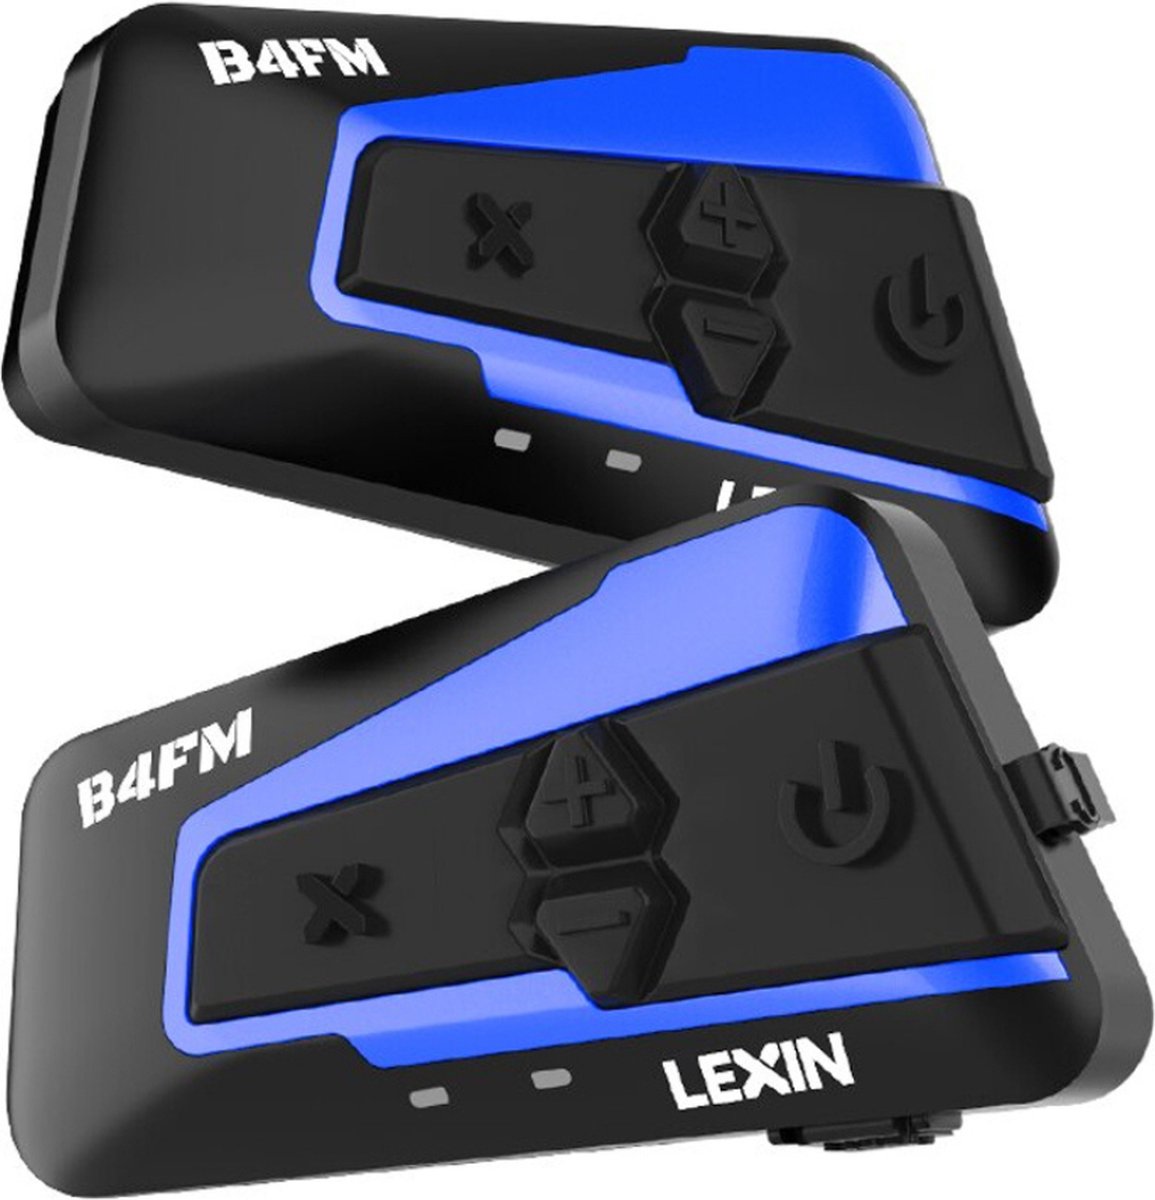 Bolture Intercom Motor Helm - Headset Voor Motorhelm - Communicatiesysteem - Waterdicht - Bluetooth 5.0 - FM Radio - 2km Bereik